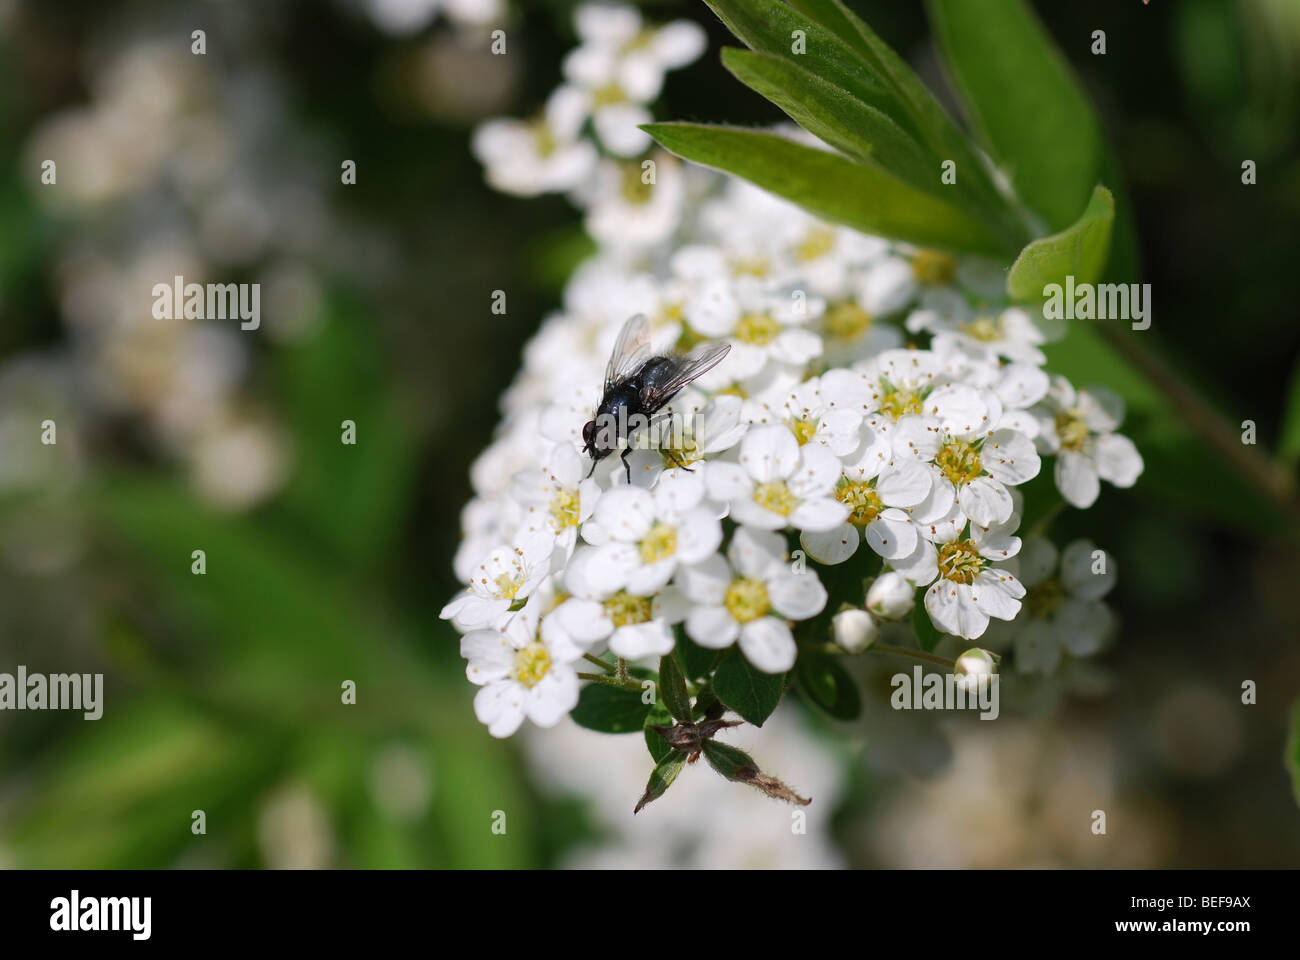 Fly seduto su una Spiraea x cinerea Grefsheim fiore Foto Stock